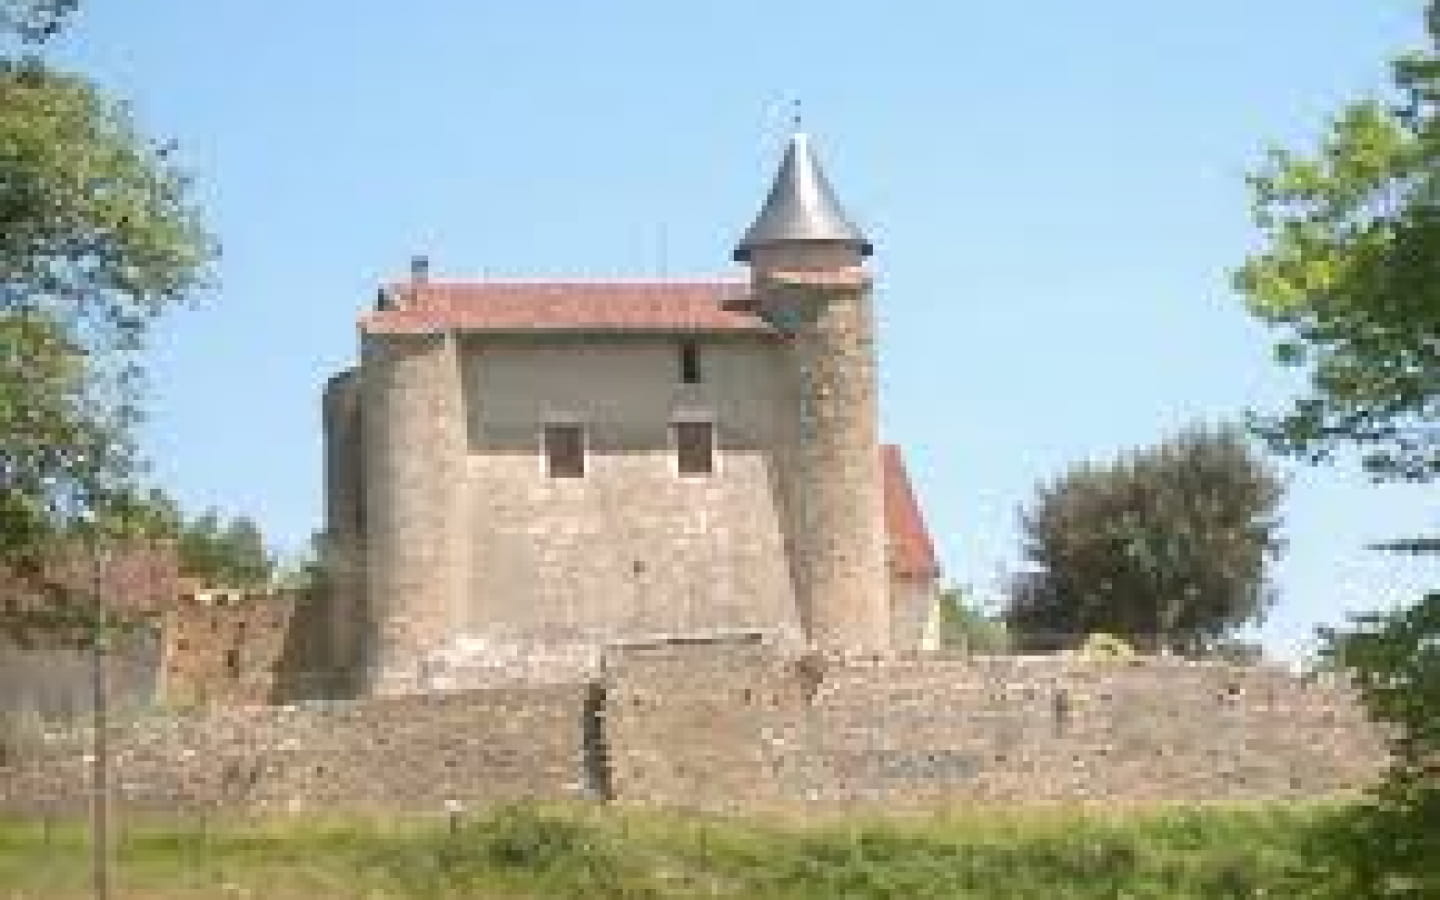 Château de Rignat ou château Pinel